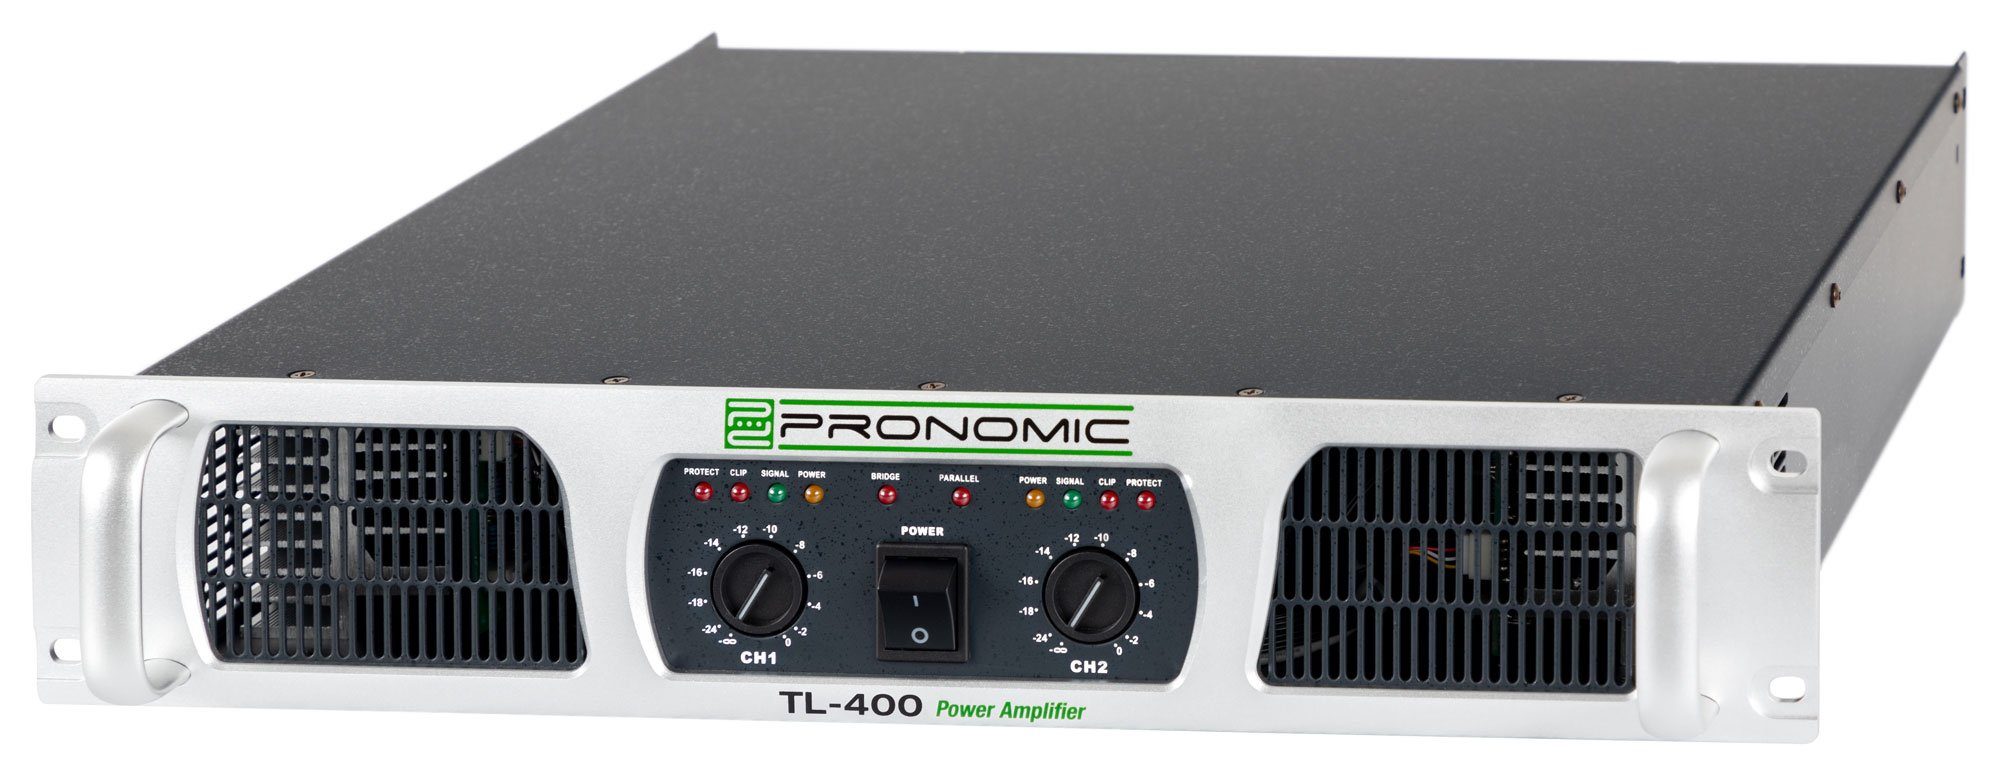 2000 W, Pronomic (Anzahl Stereo-Leistungsverstärker Endstufe Ohm) an 2x TL-400 Verstärker Schraubklemmen, Kanäle: 2 2 Watt Kanal 1000 mit Lautsprecher-